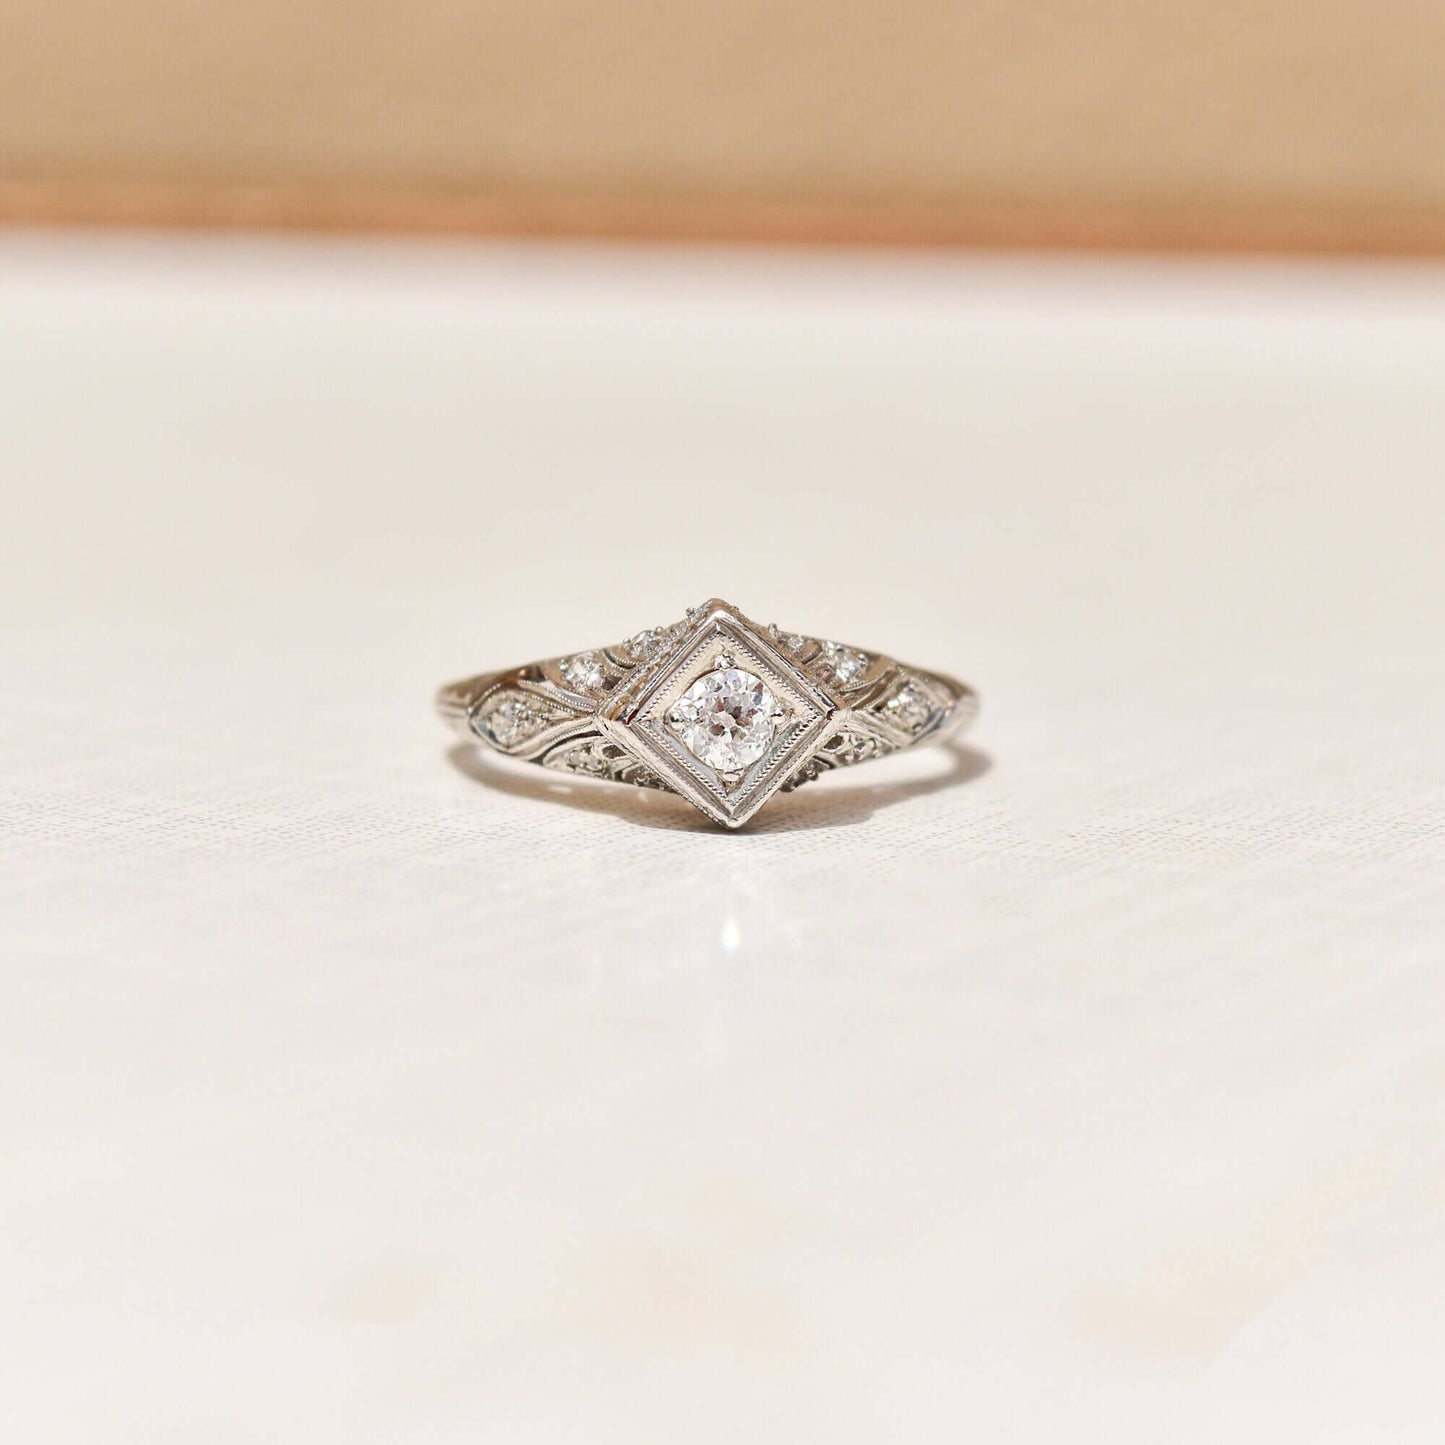 Edwardian Platinum Diamond Engagement Ring, Diamond Filigree Accents, Estate Jewelry, Size 10 US - Good's Vintage